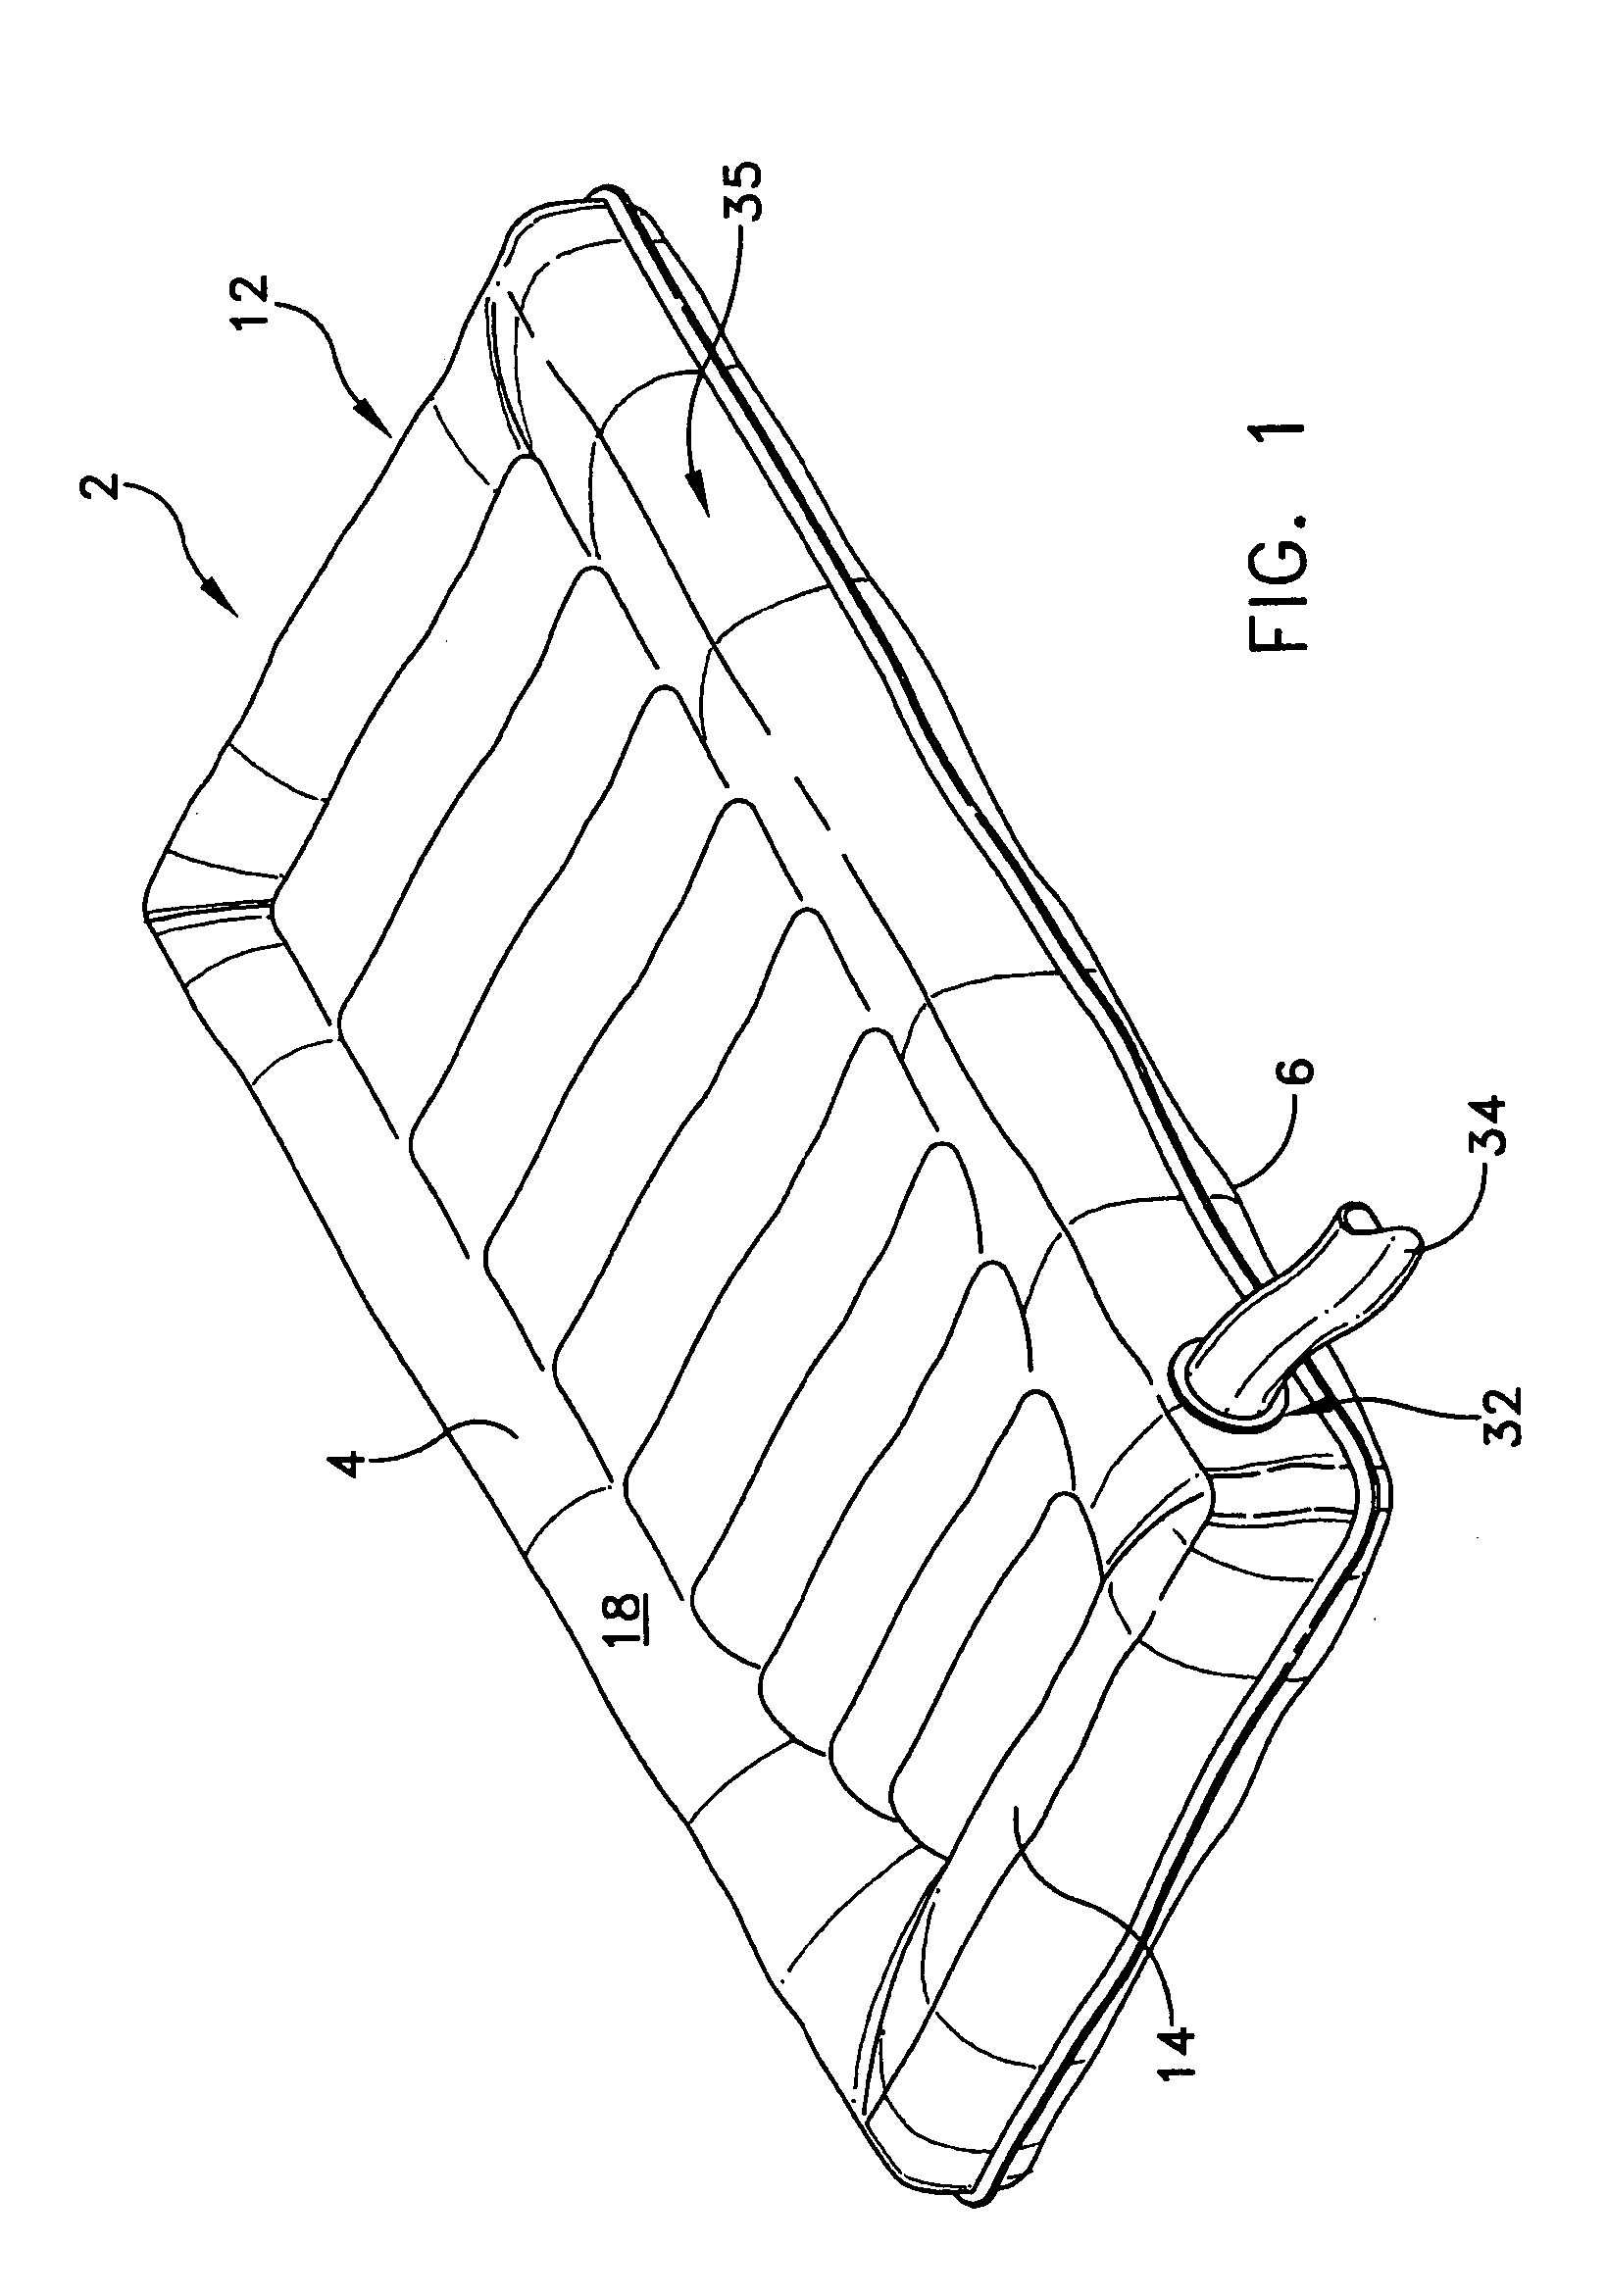 Air mattress with single perimeter seam